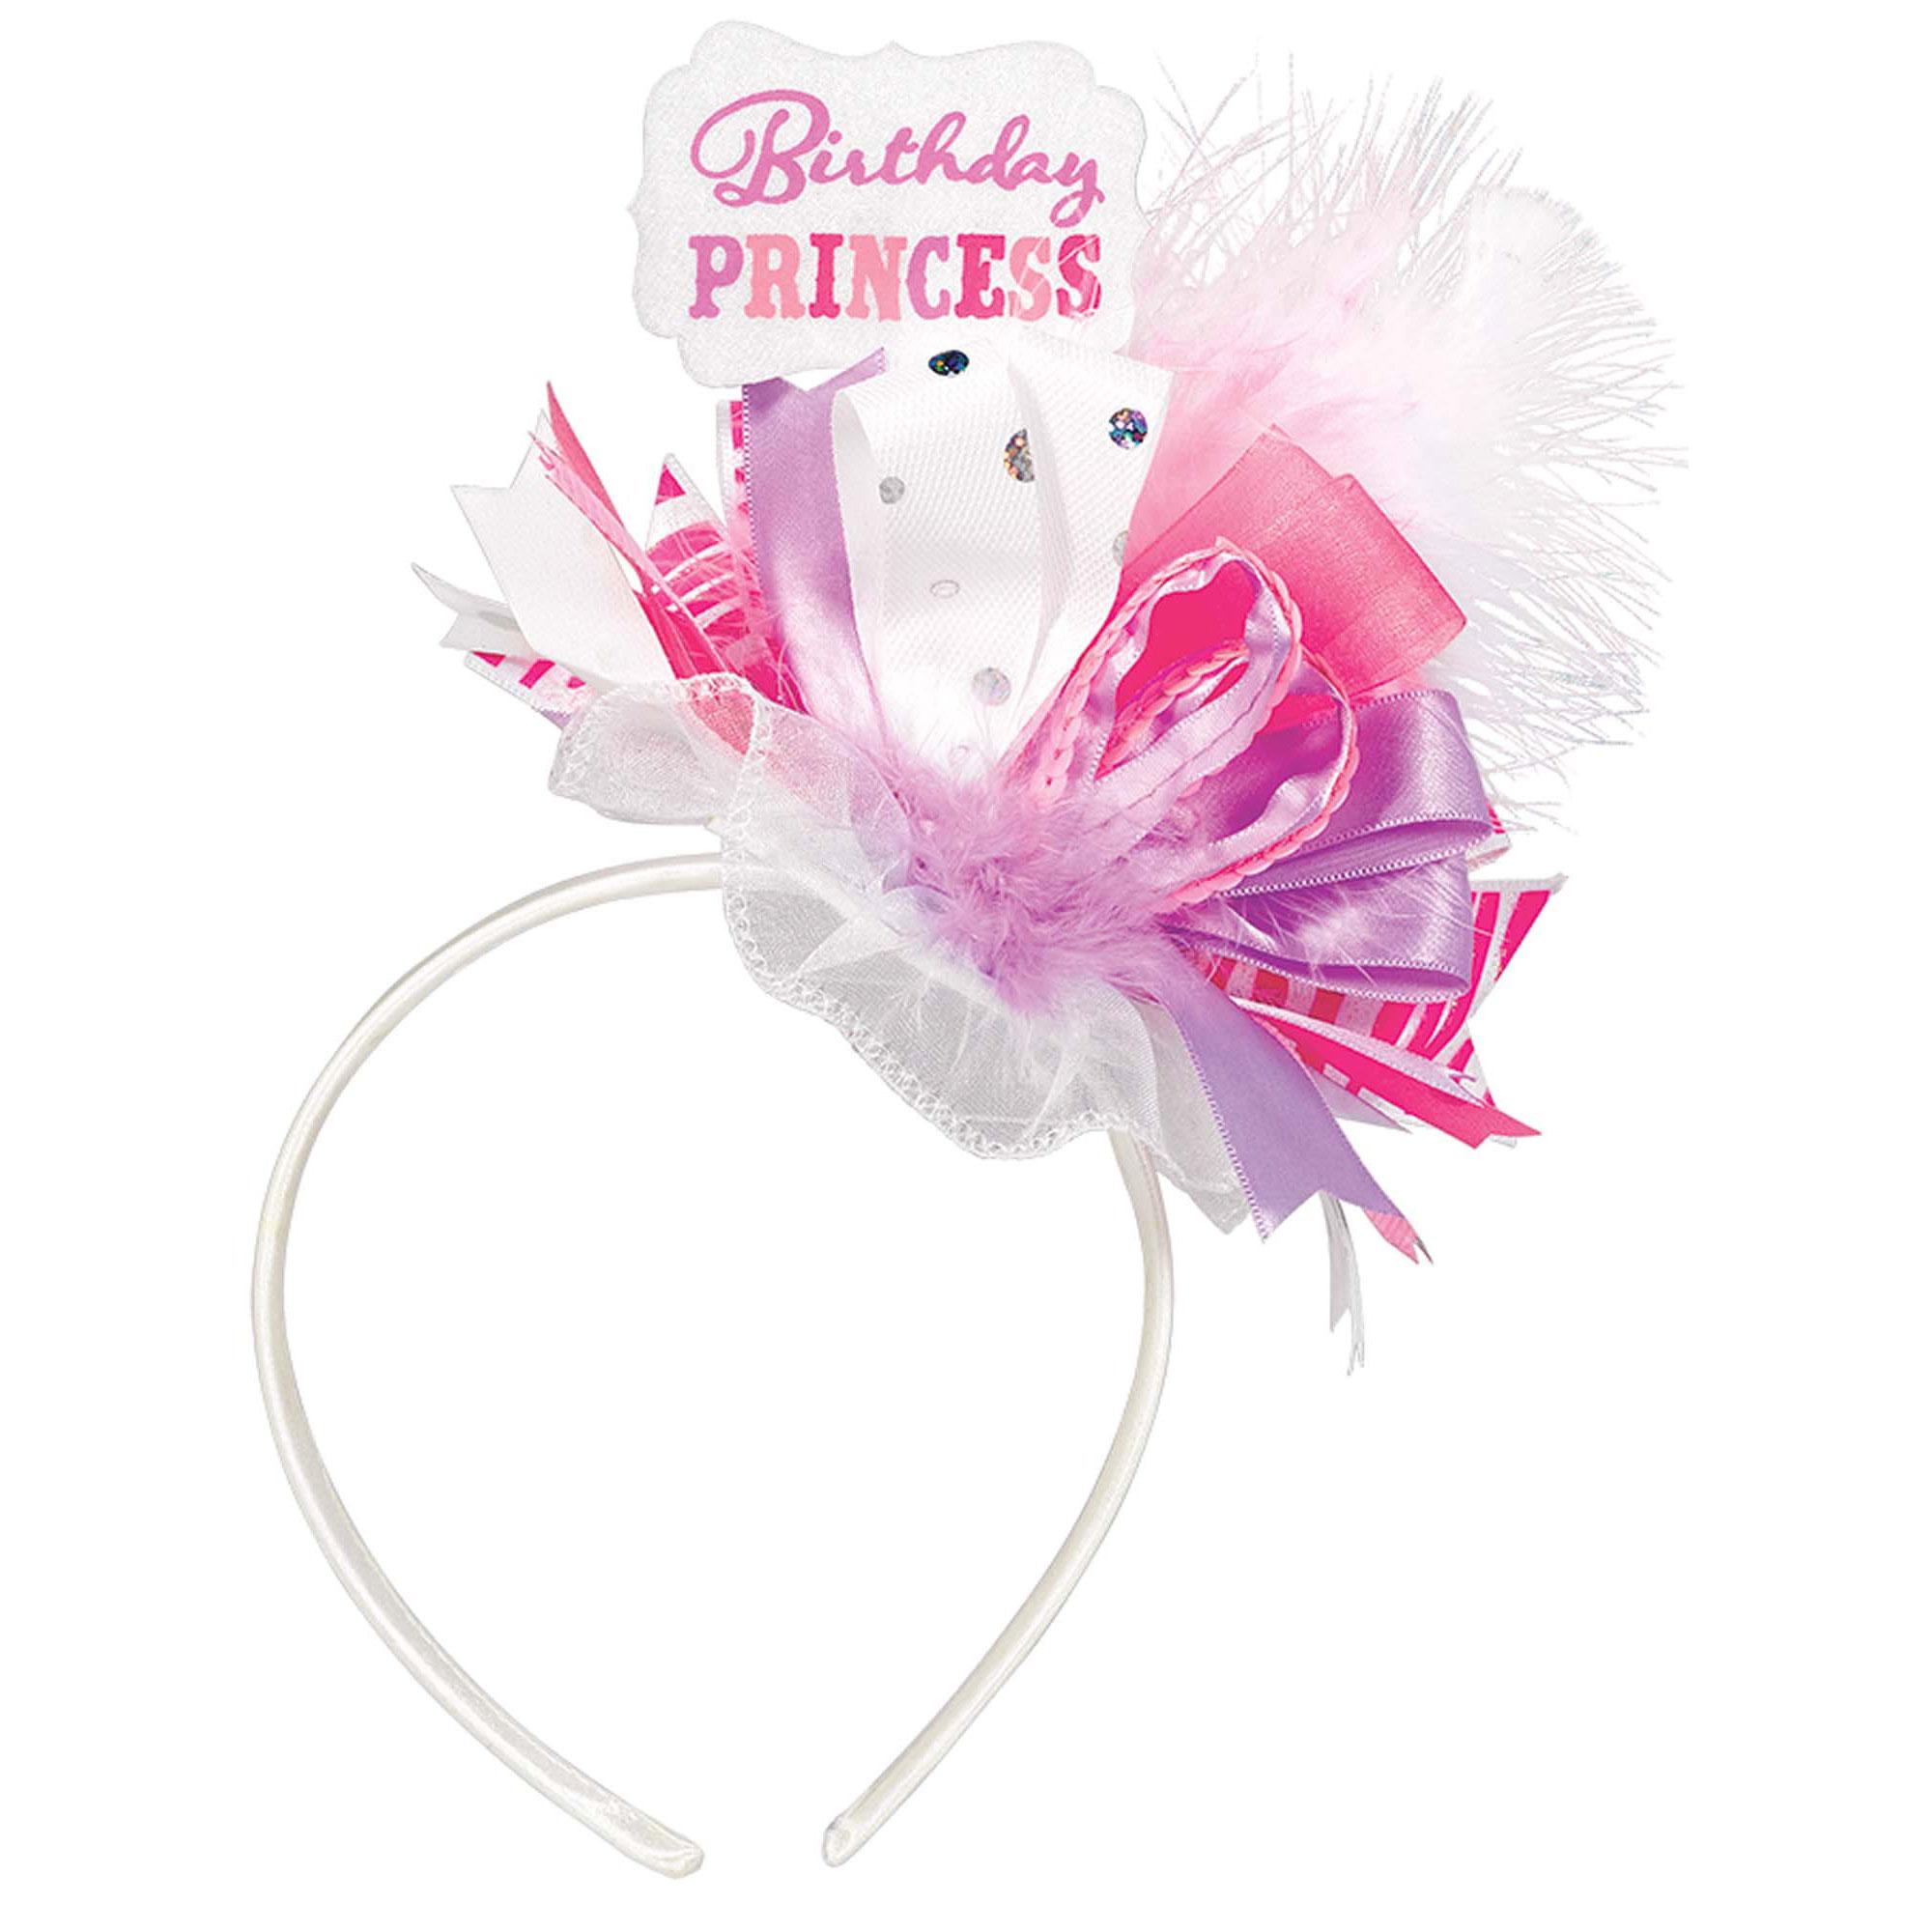 Birthday Princess Fashion Headband Costumes & Apparel - Party Centre